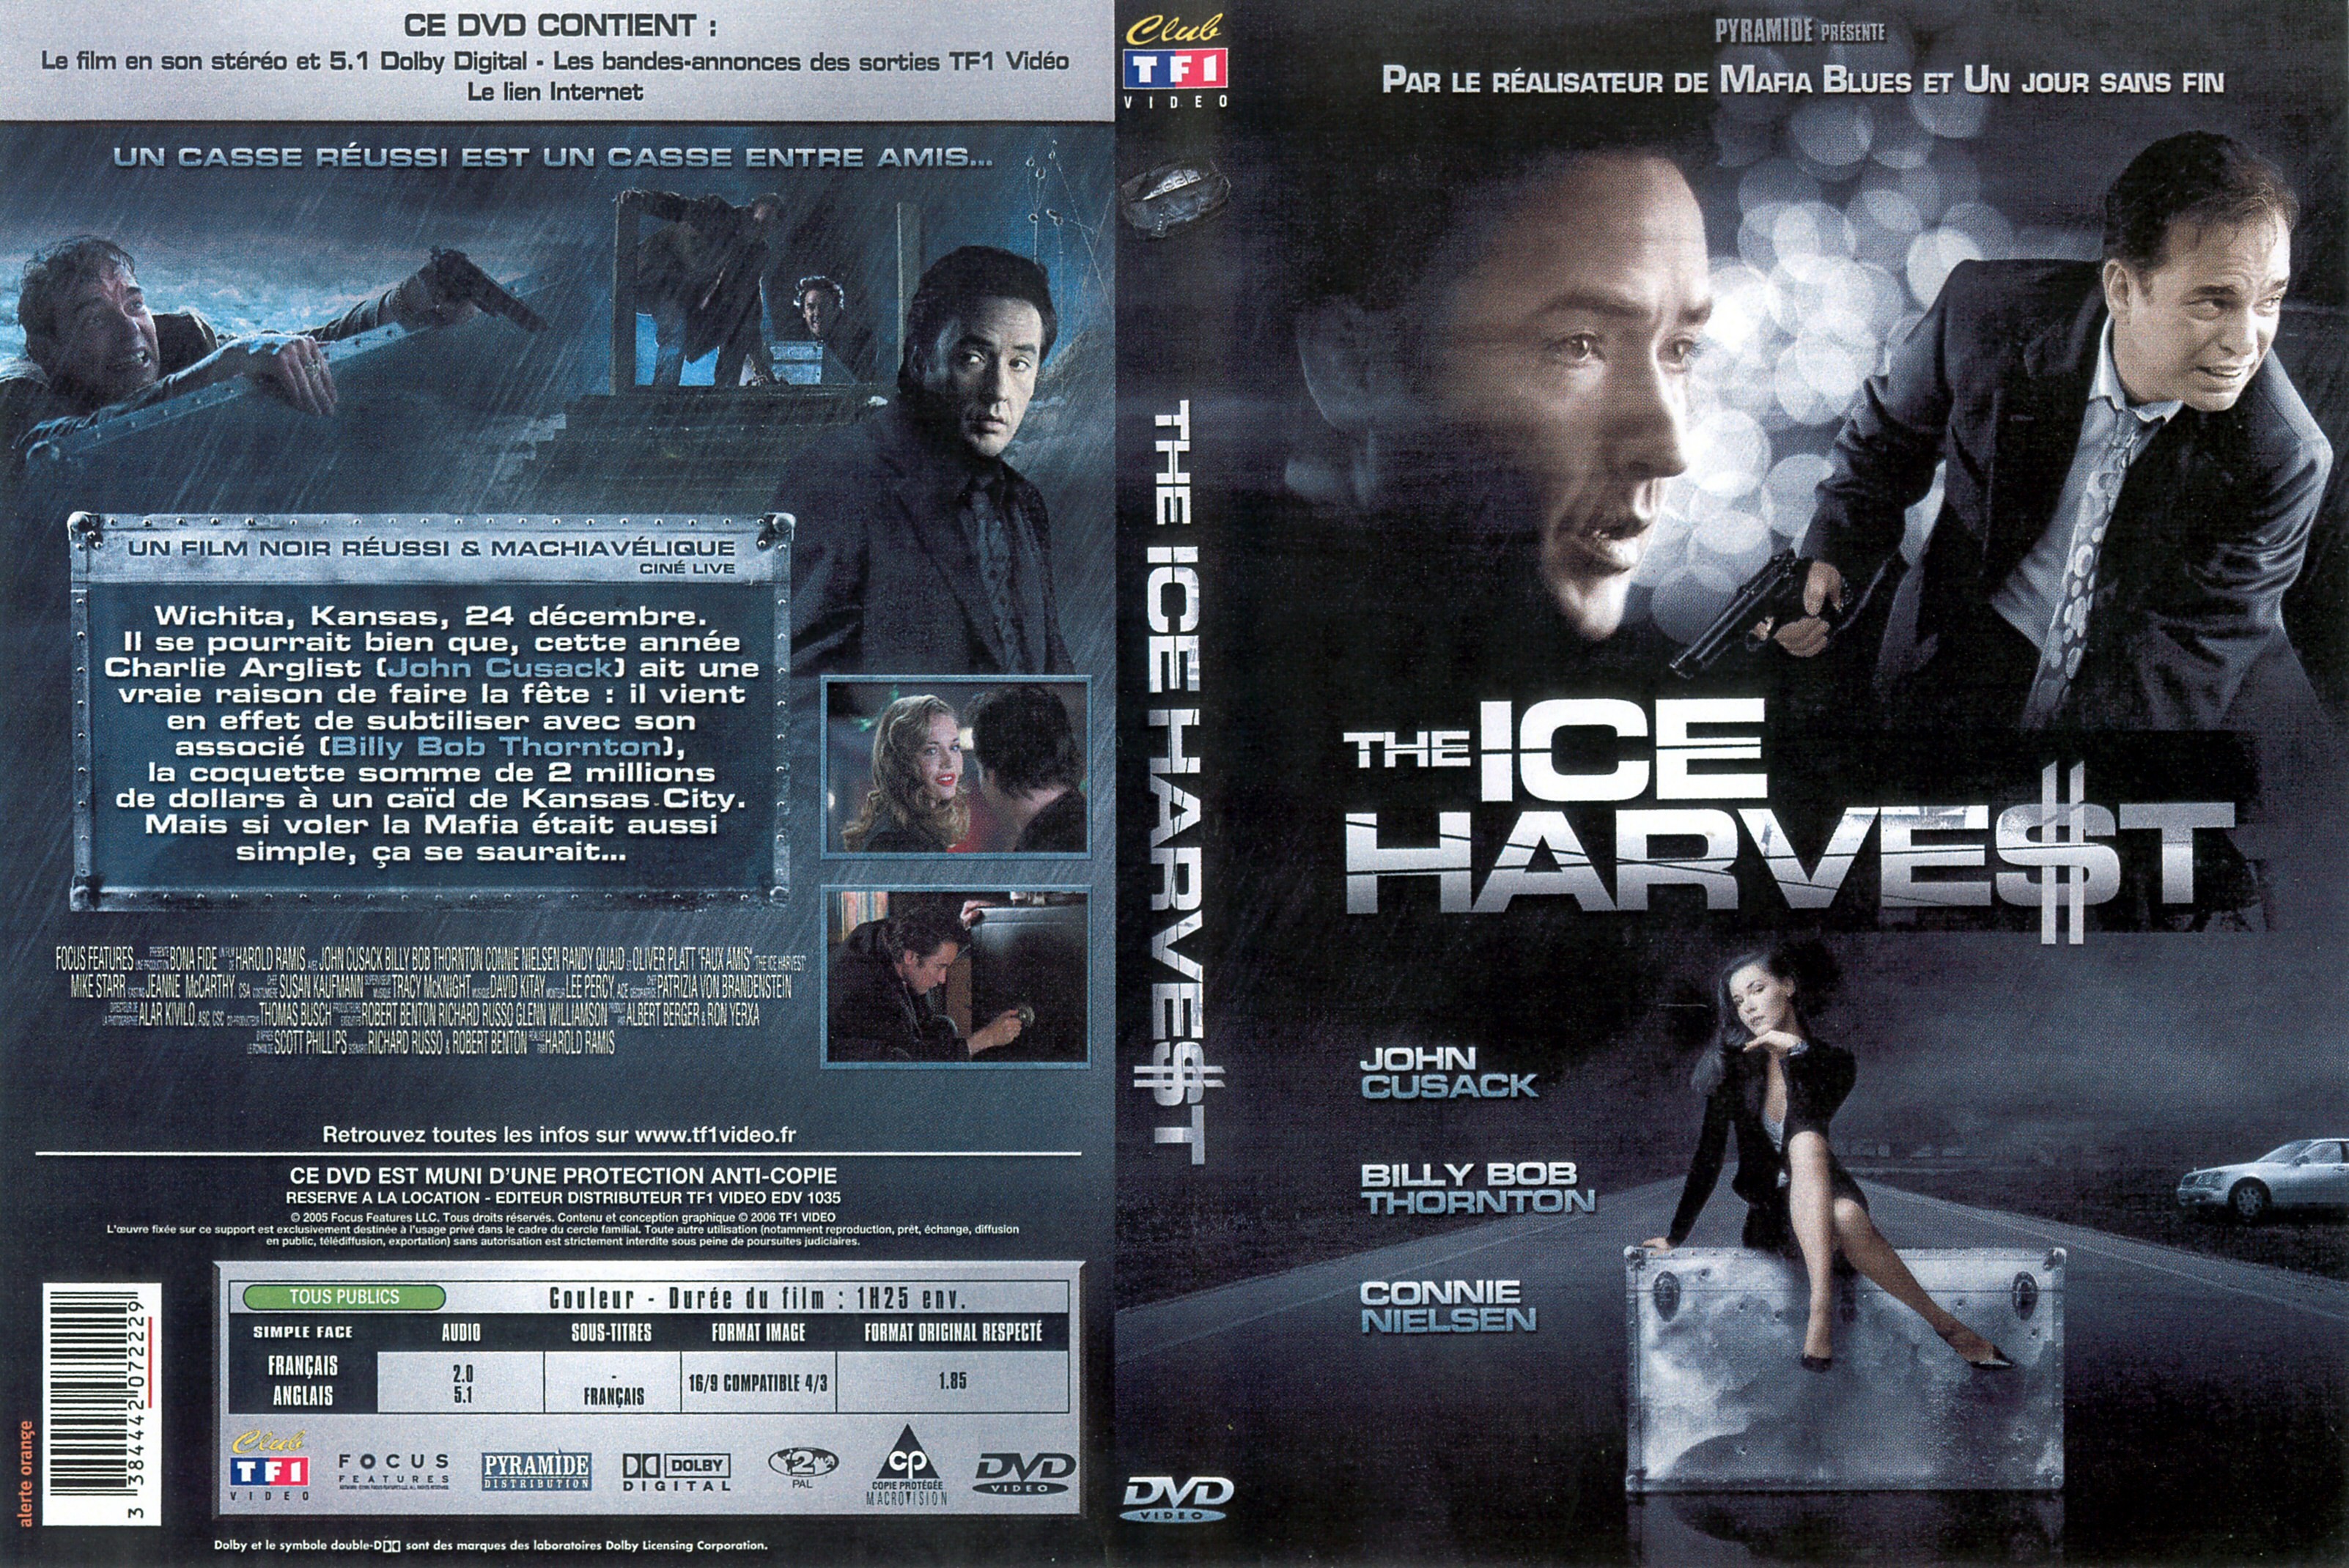 Jaquette DVD The ice harvest v2